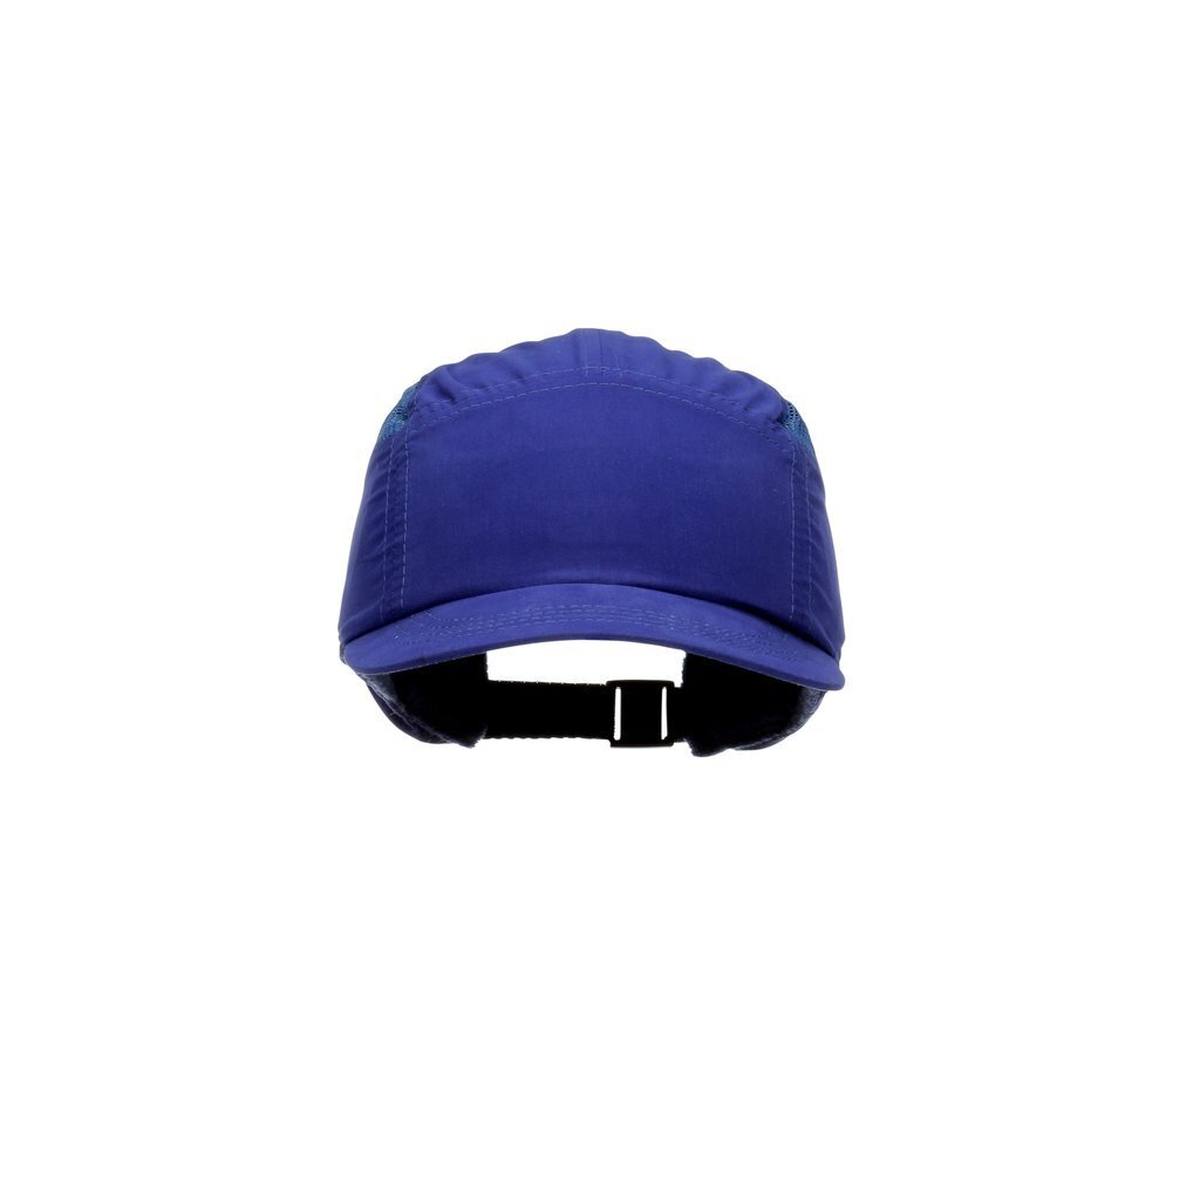 3M First Base Plus - berretto antiurto blu royal - visiera accorciata 55 mm, EN812